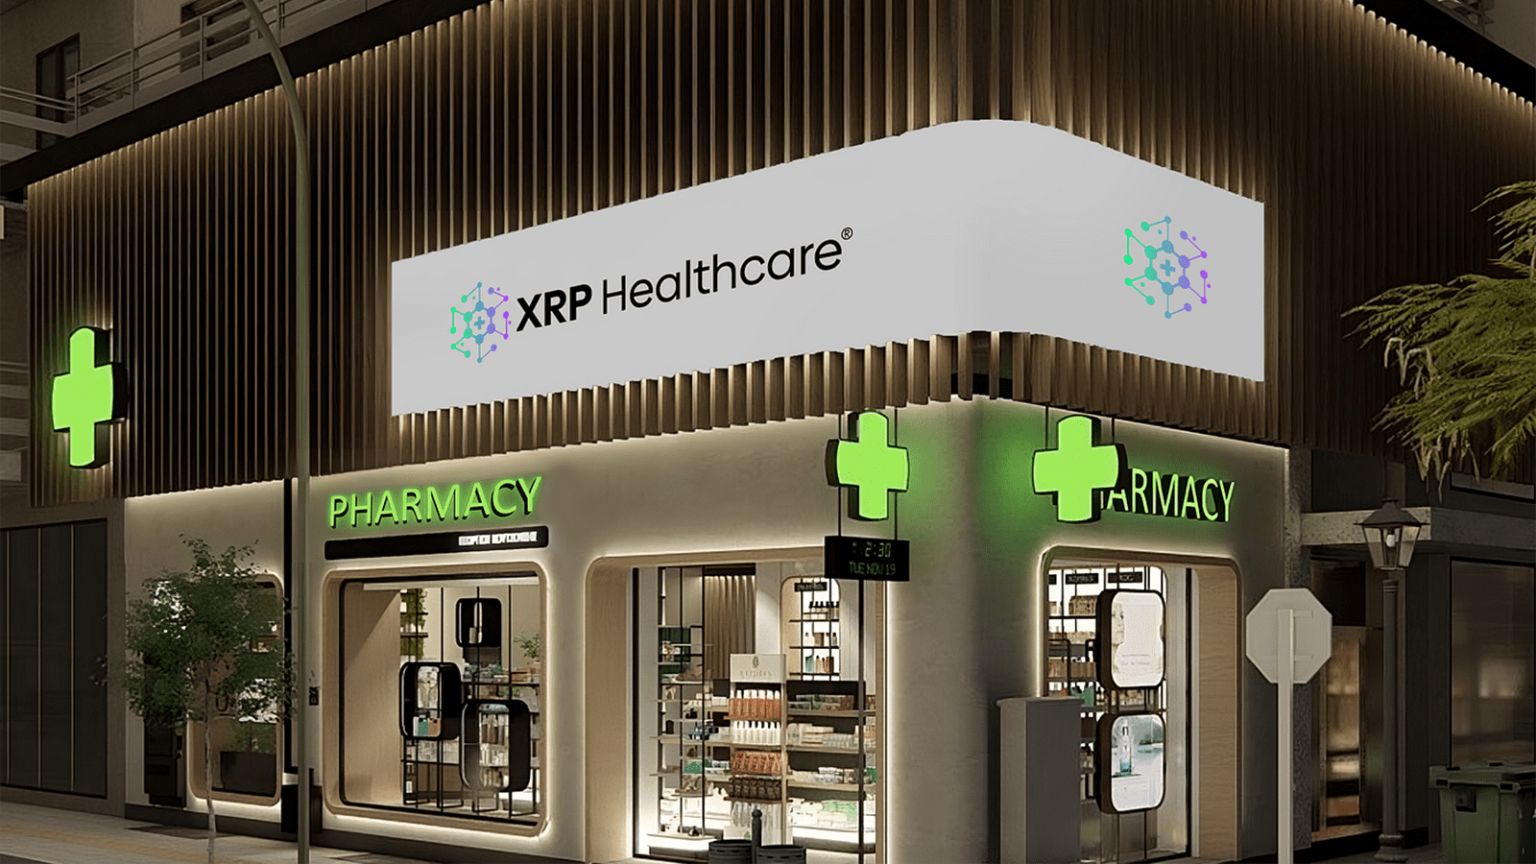 XRP Healthcare